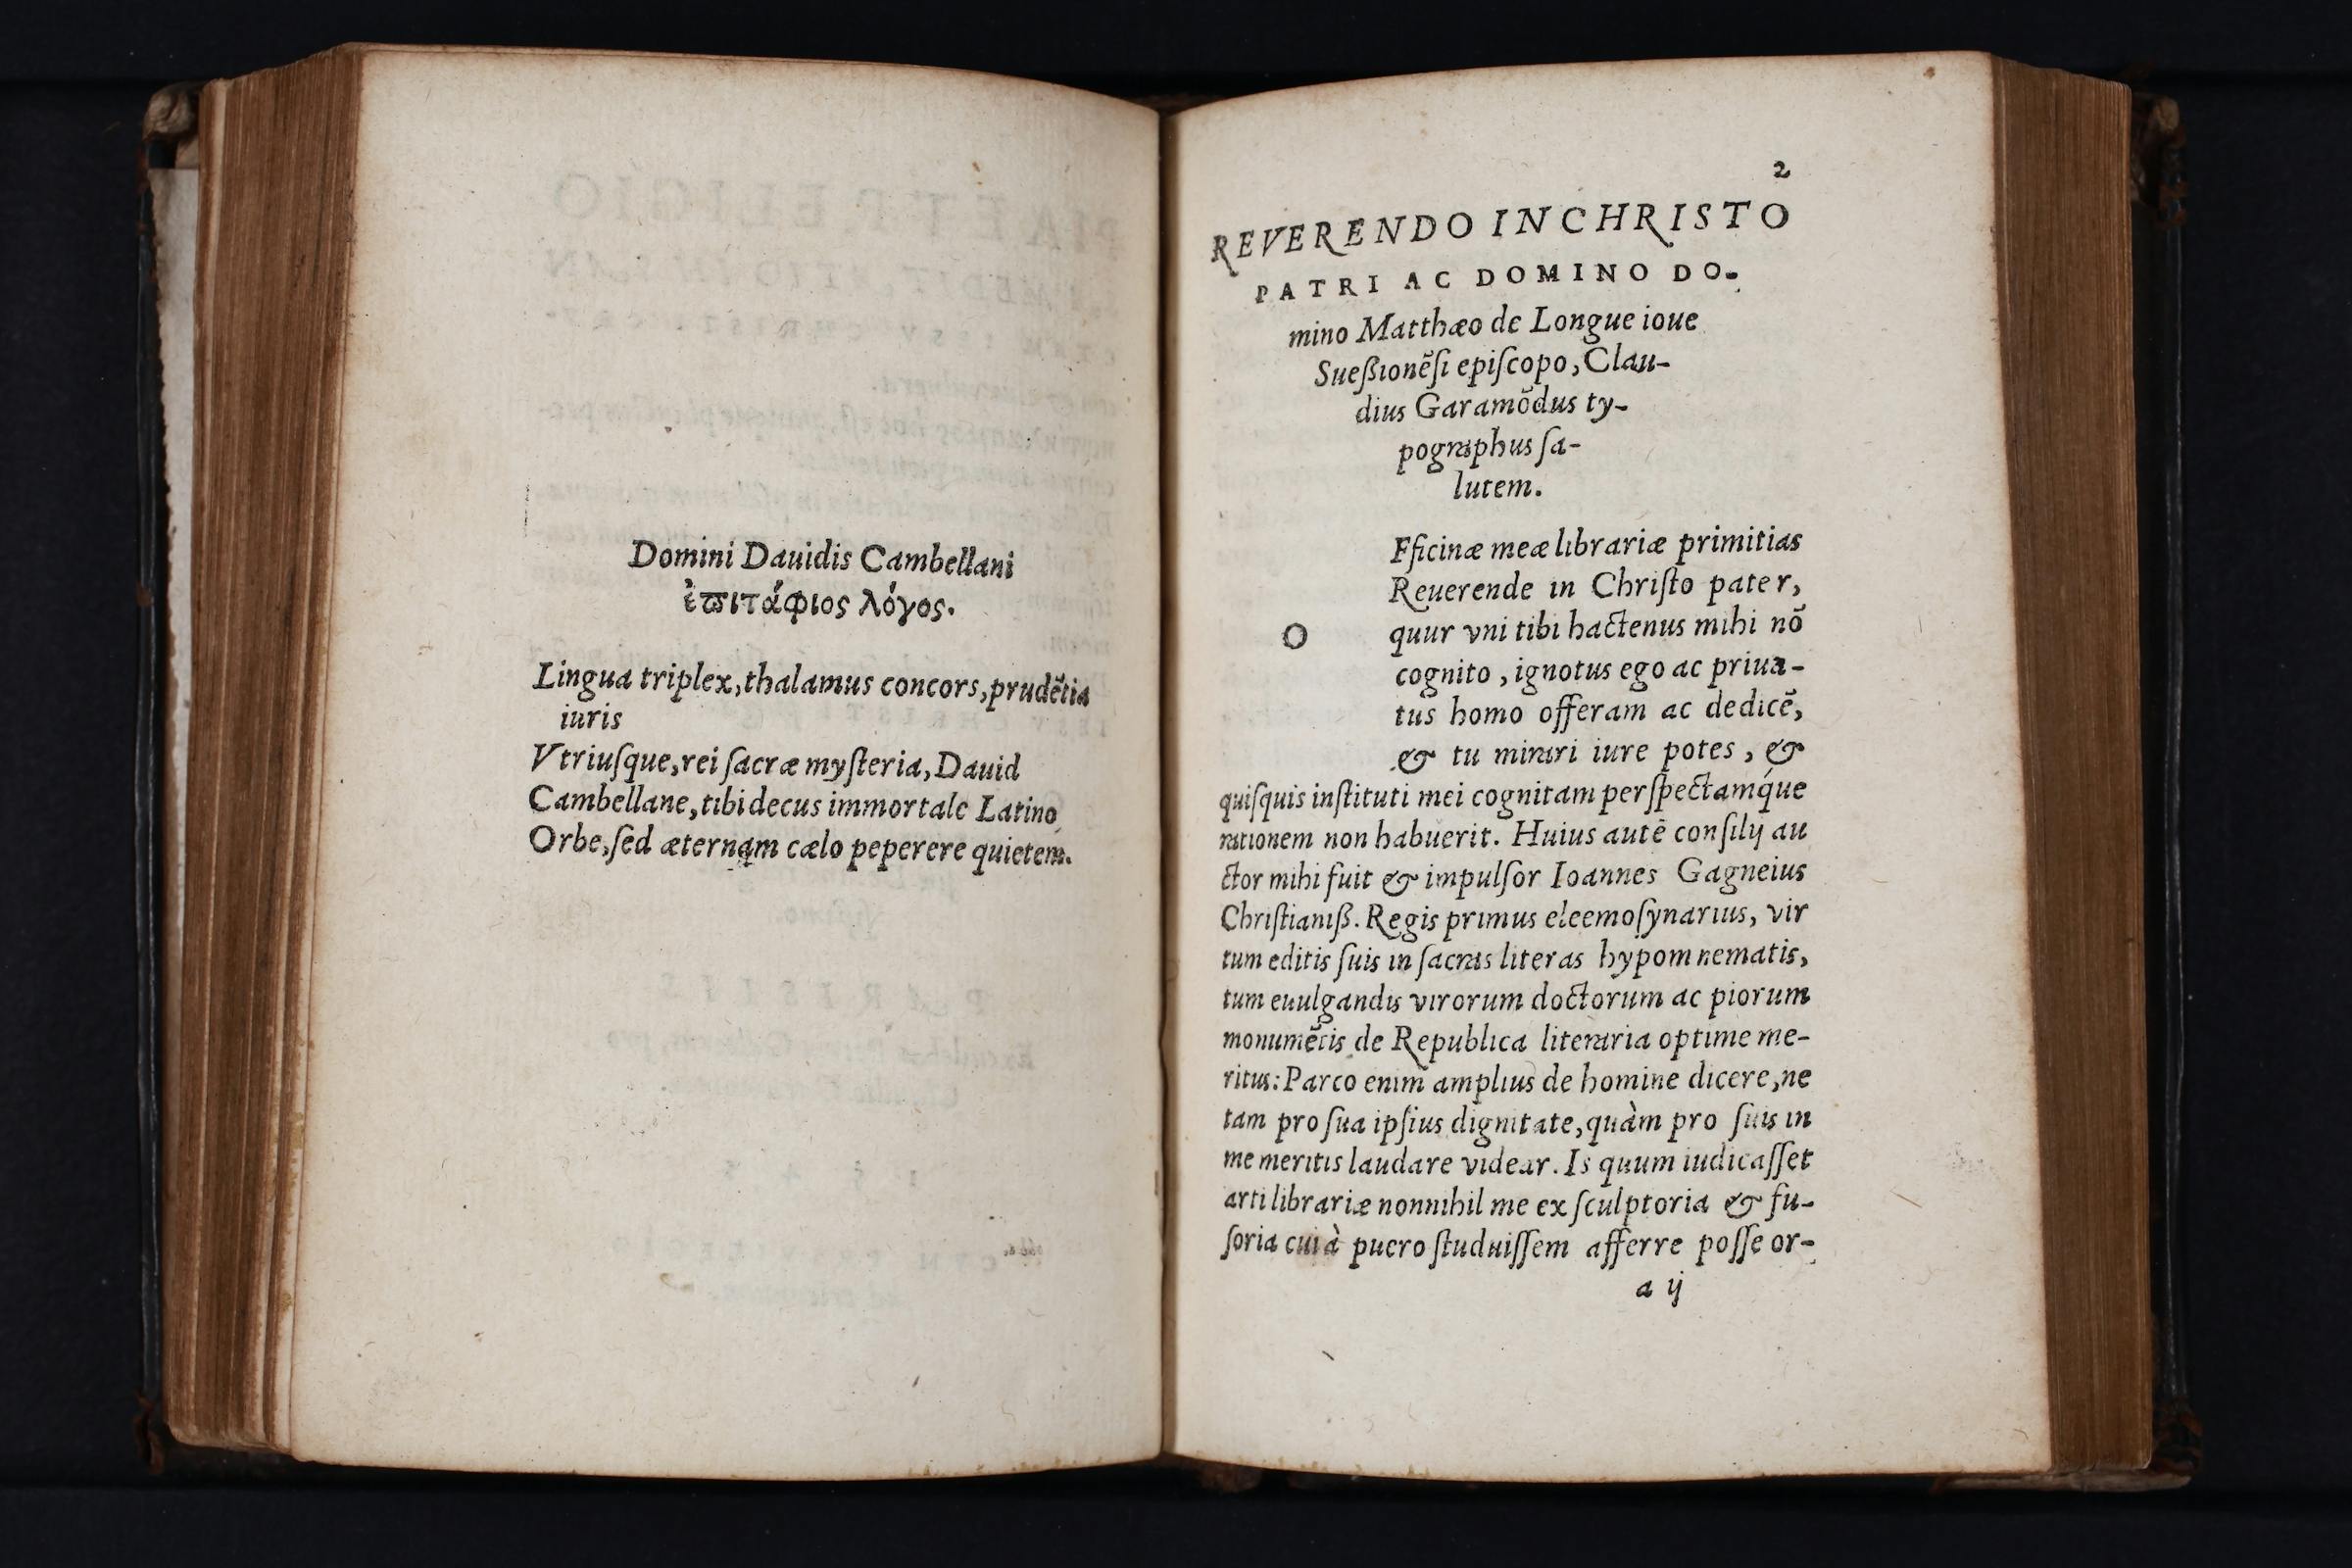 1545, Garamont publisher